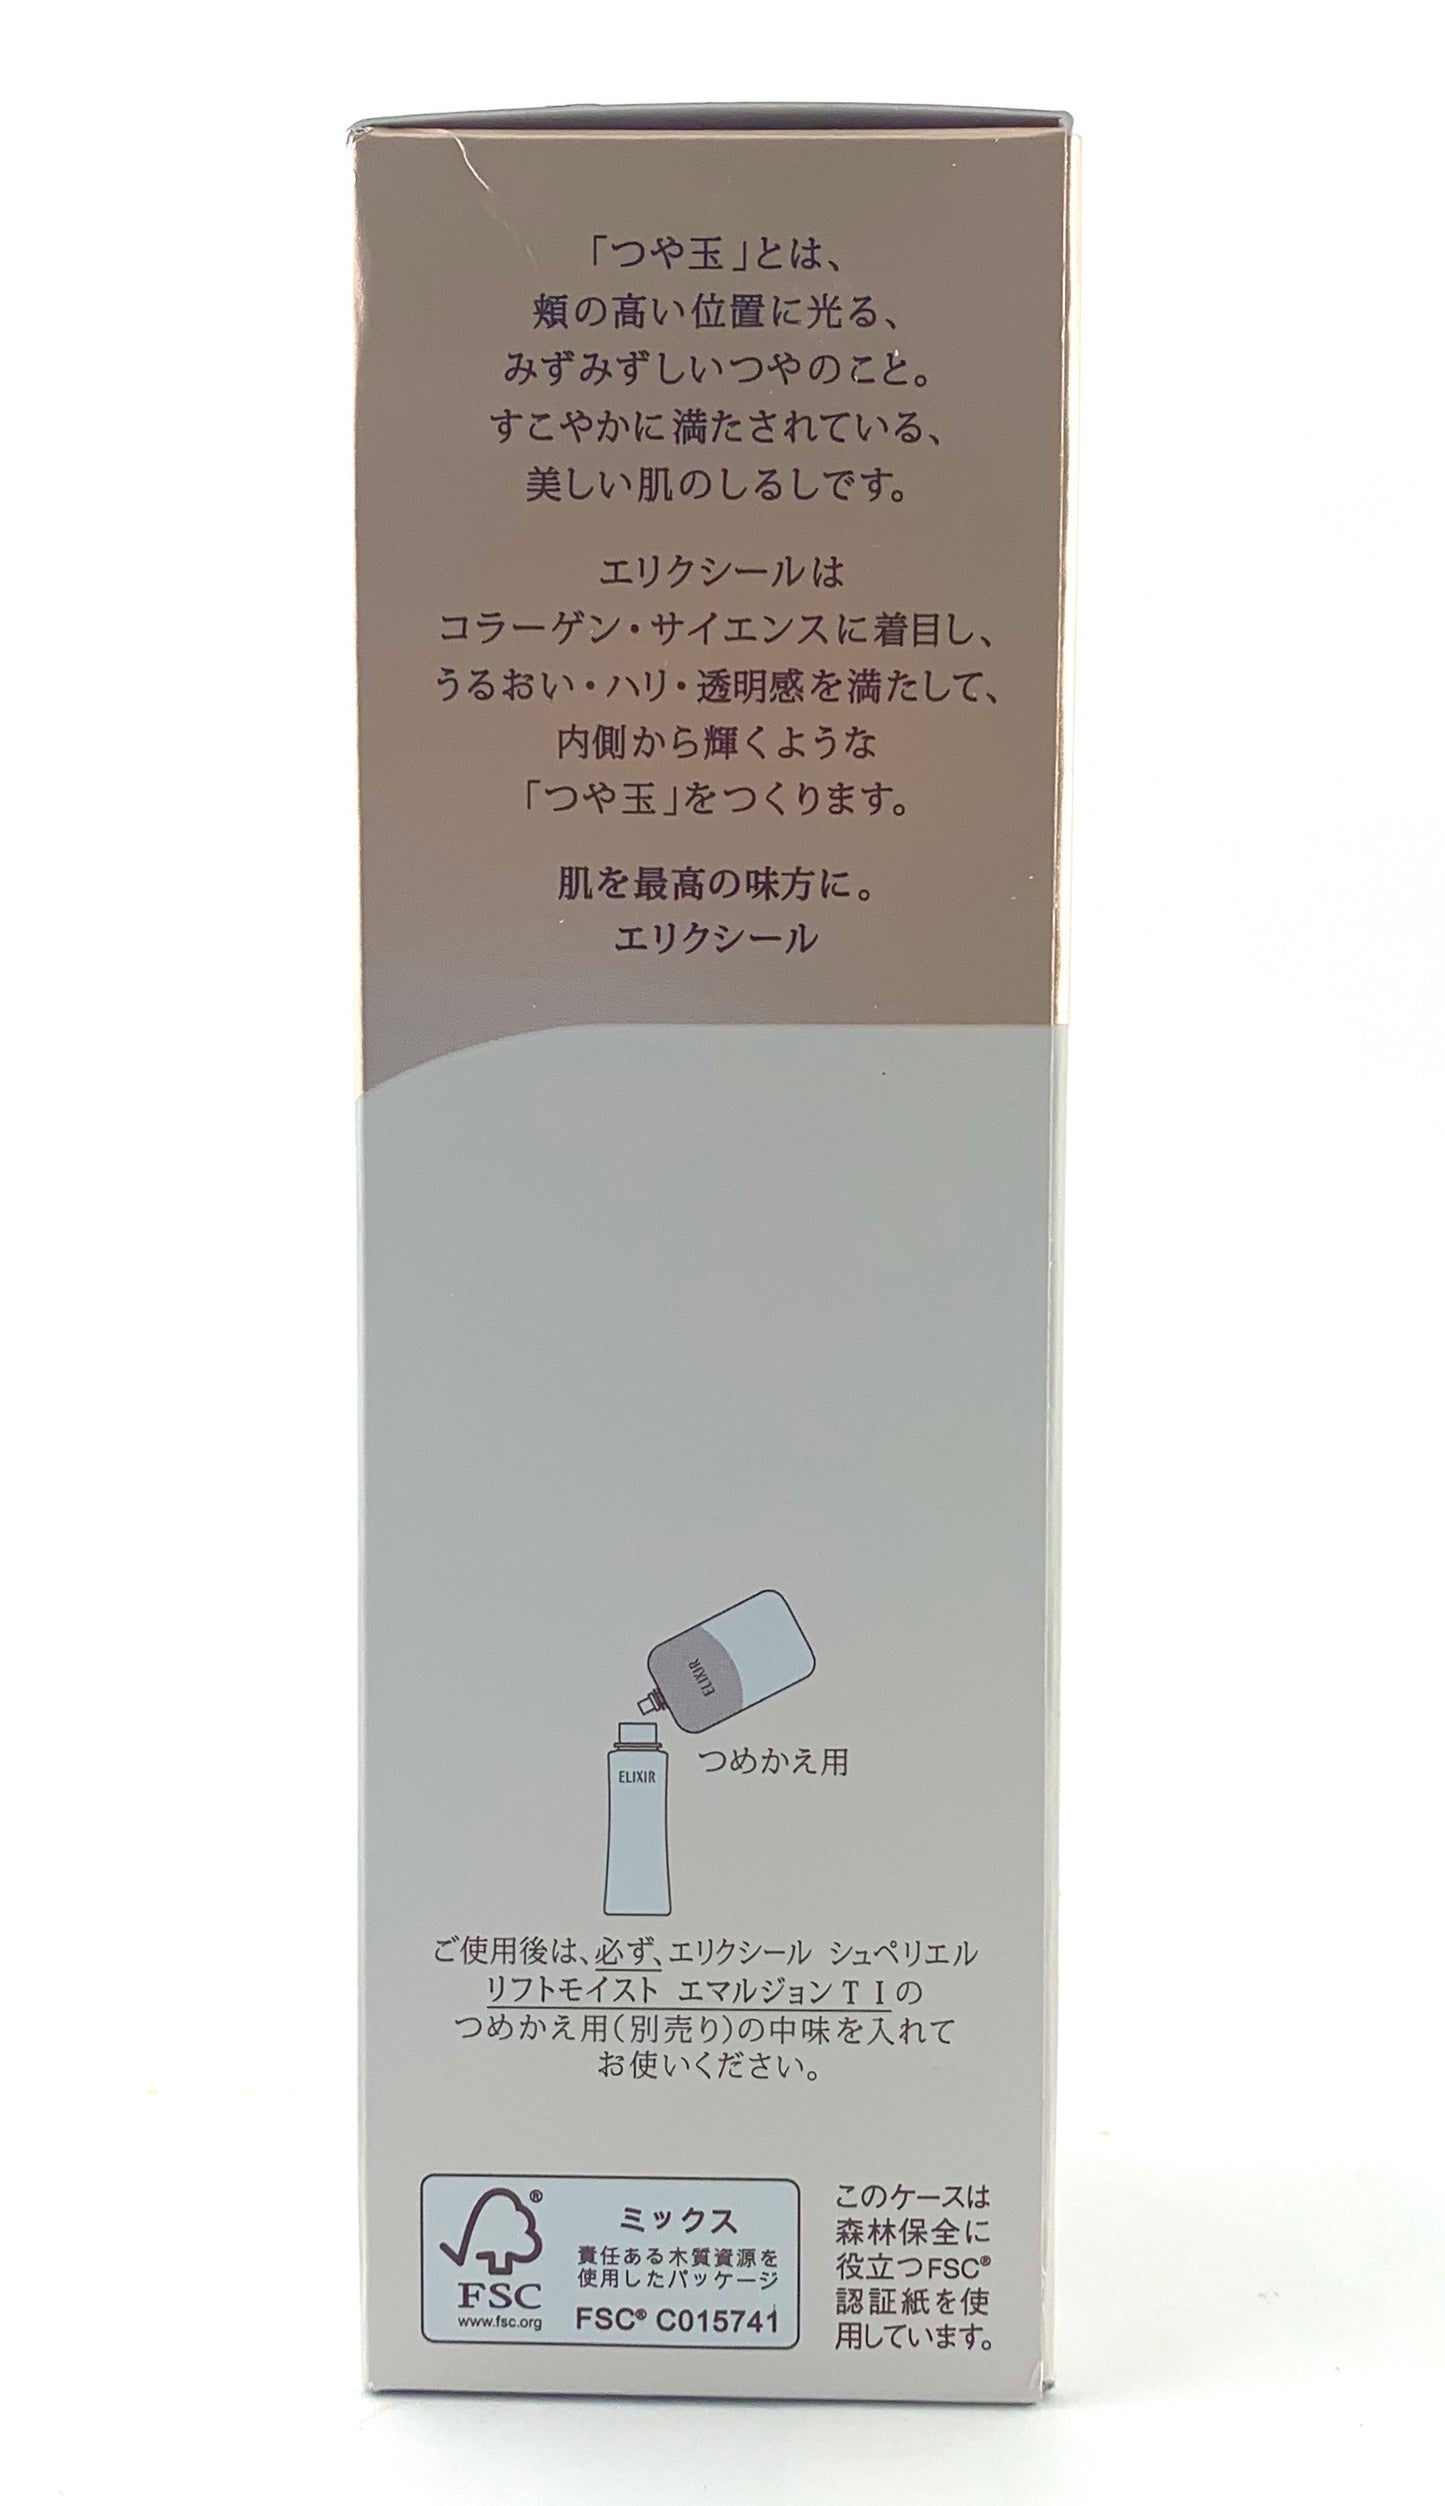 Shiseido Elixir Skin Care By Age Lifting Moisture Emulsion TI 130ml.